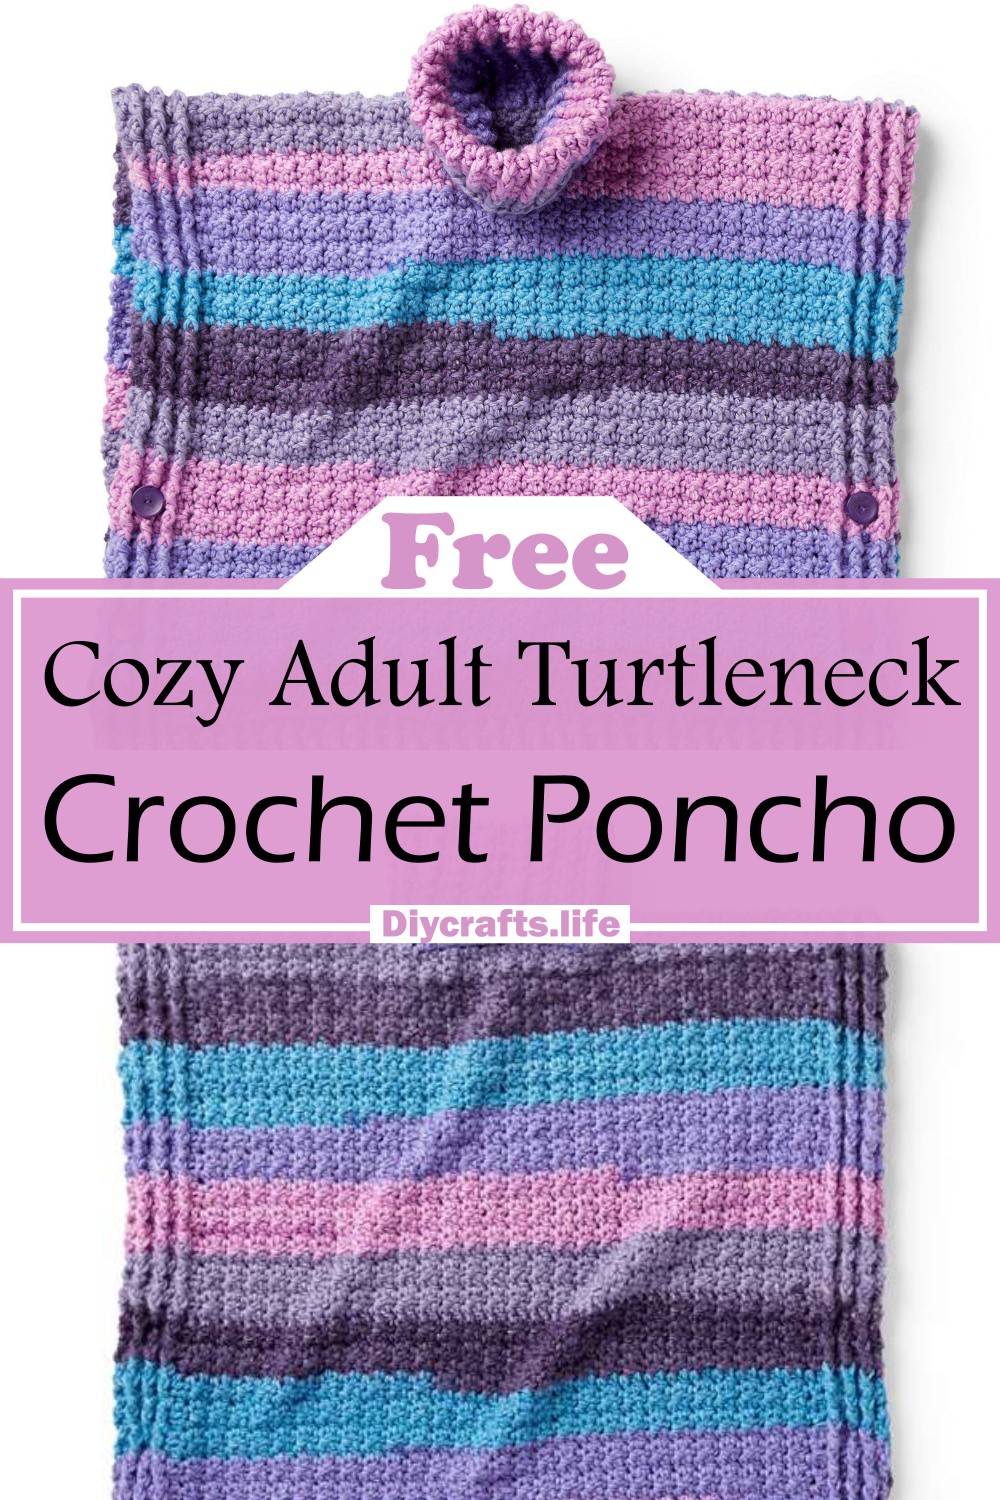 Cozy Adult Turtleneck Crochet Poncho